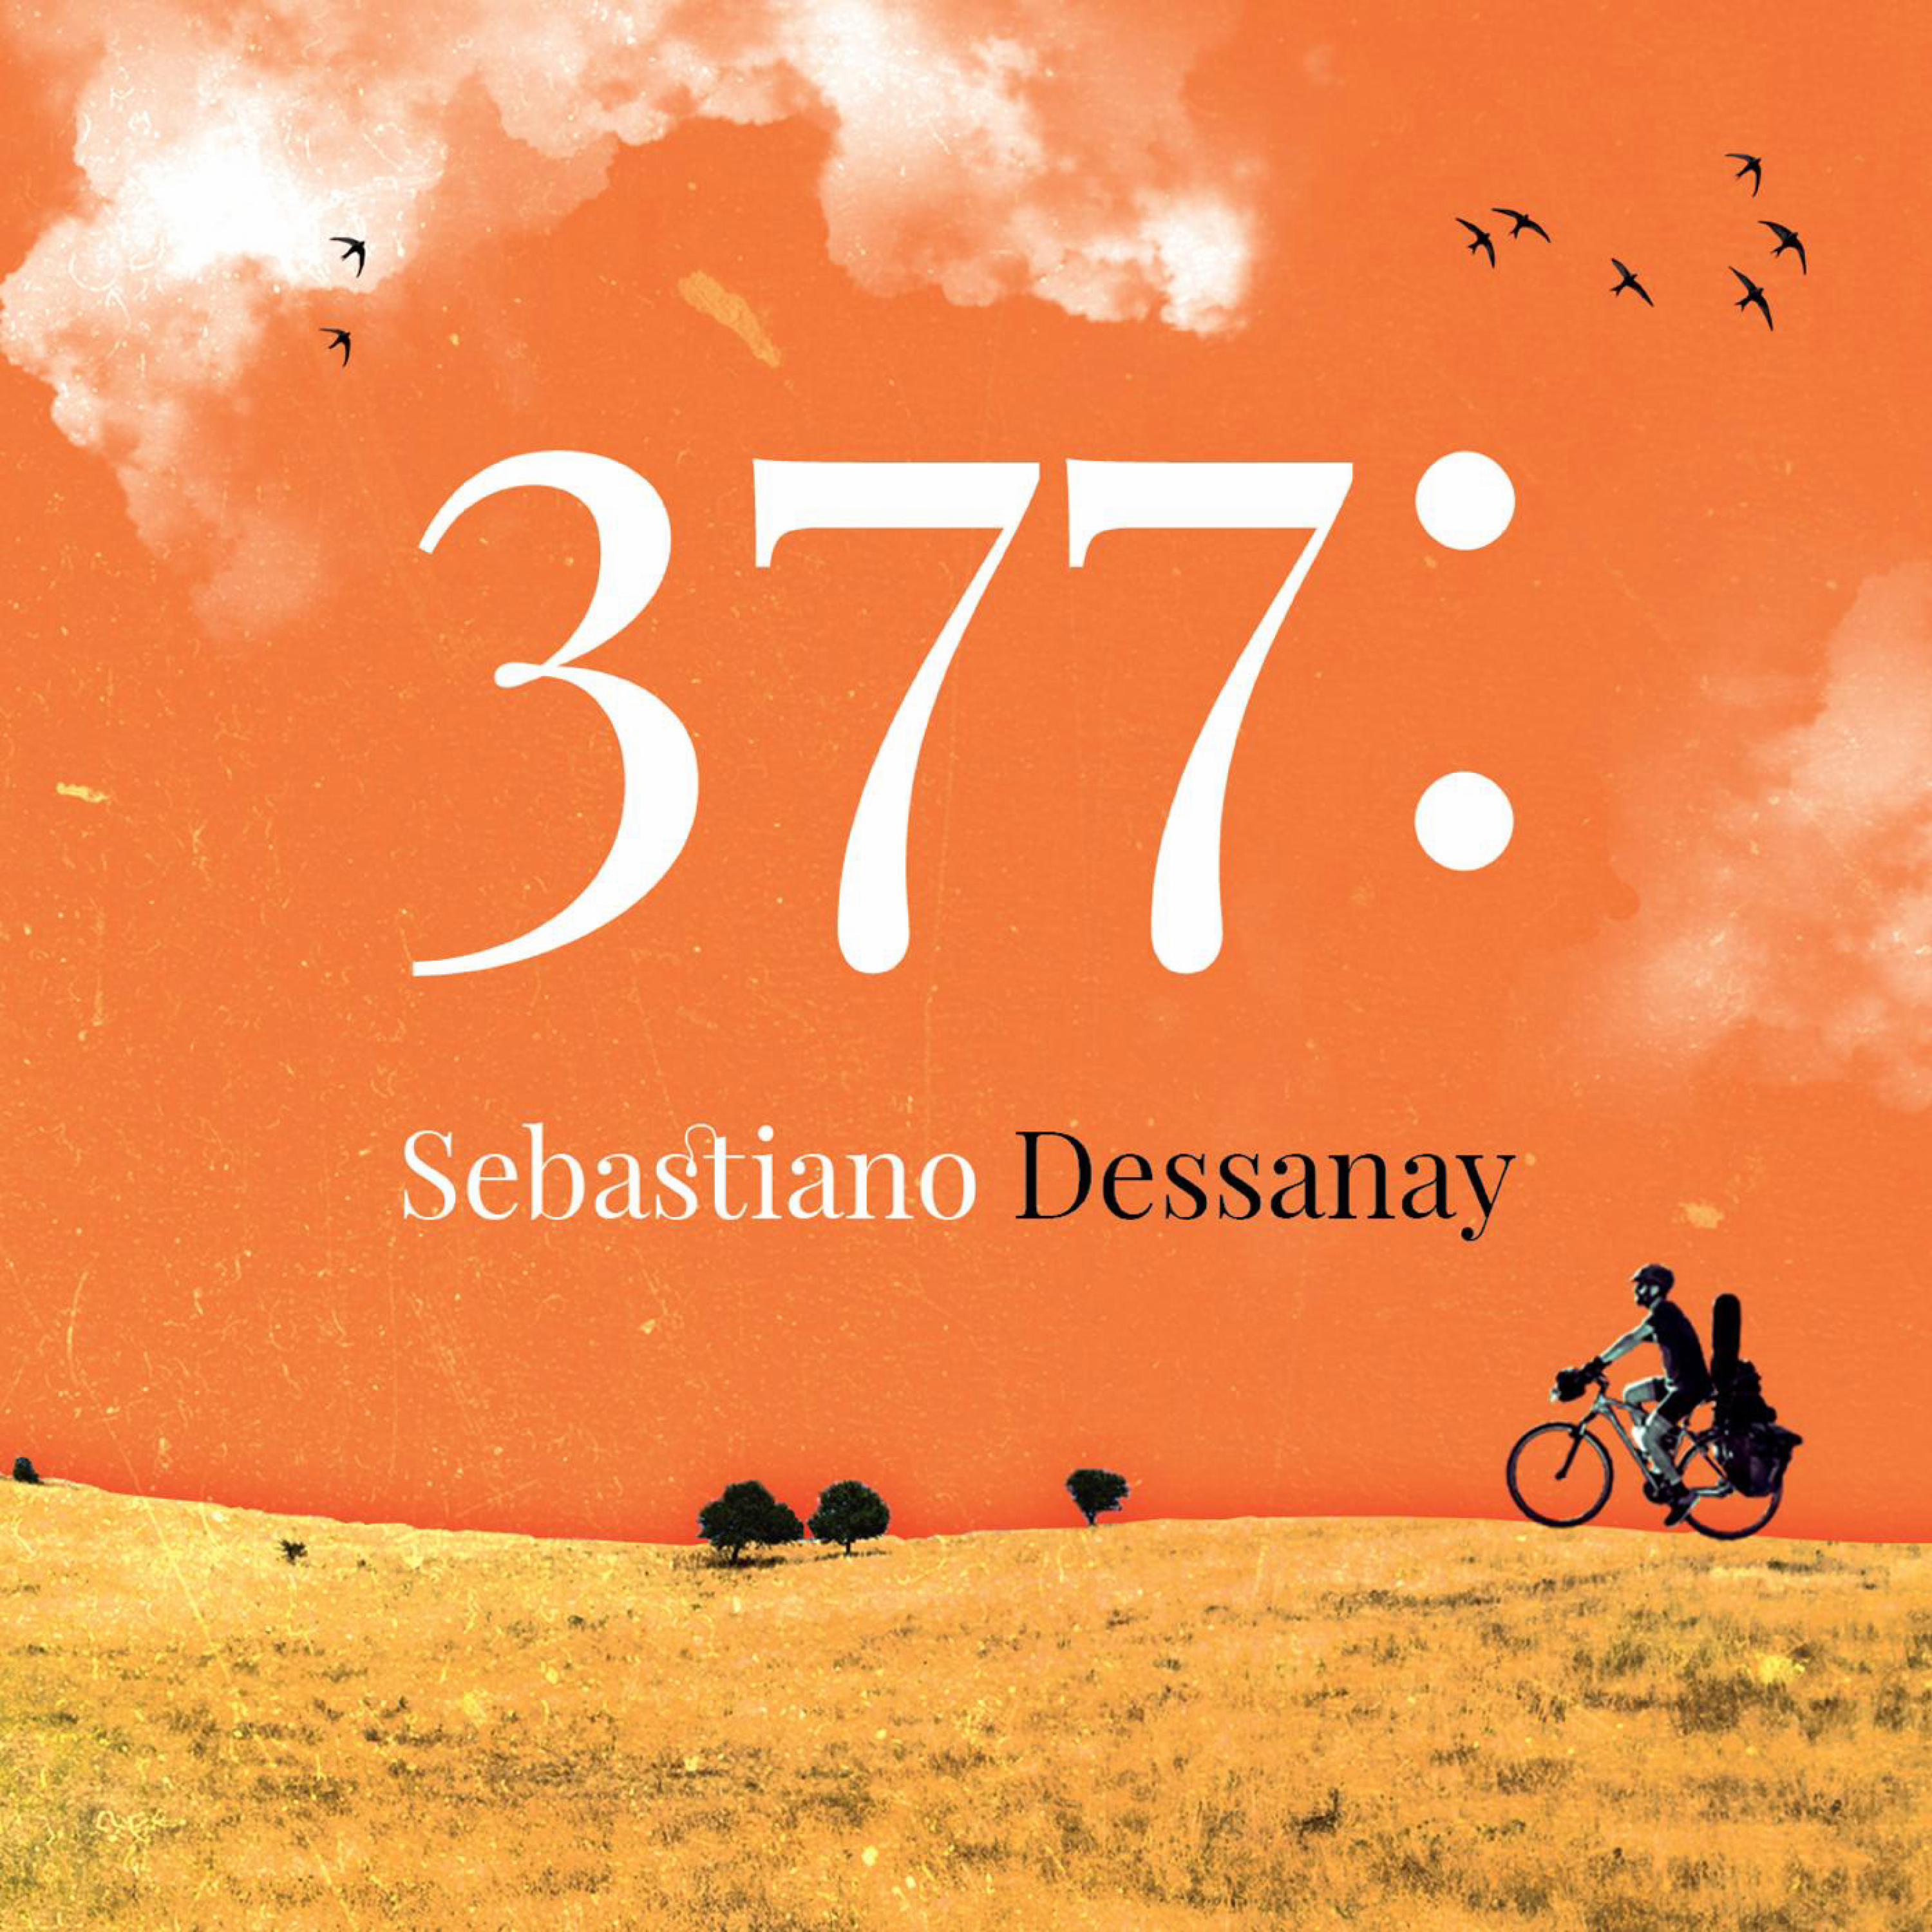 Sebastiano Dessanay - Si parte!